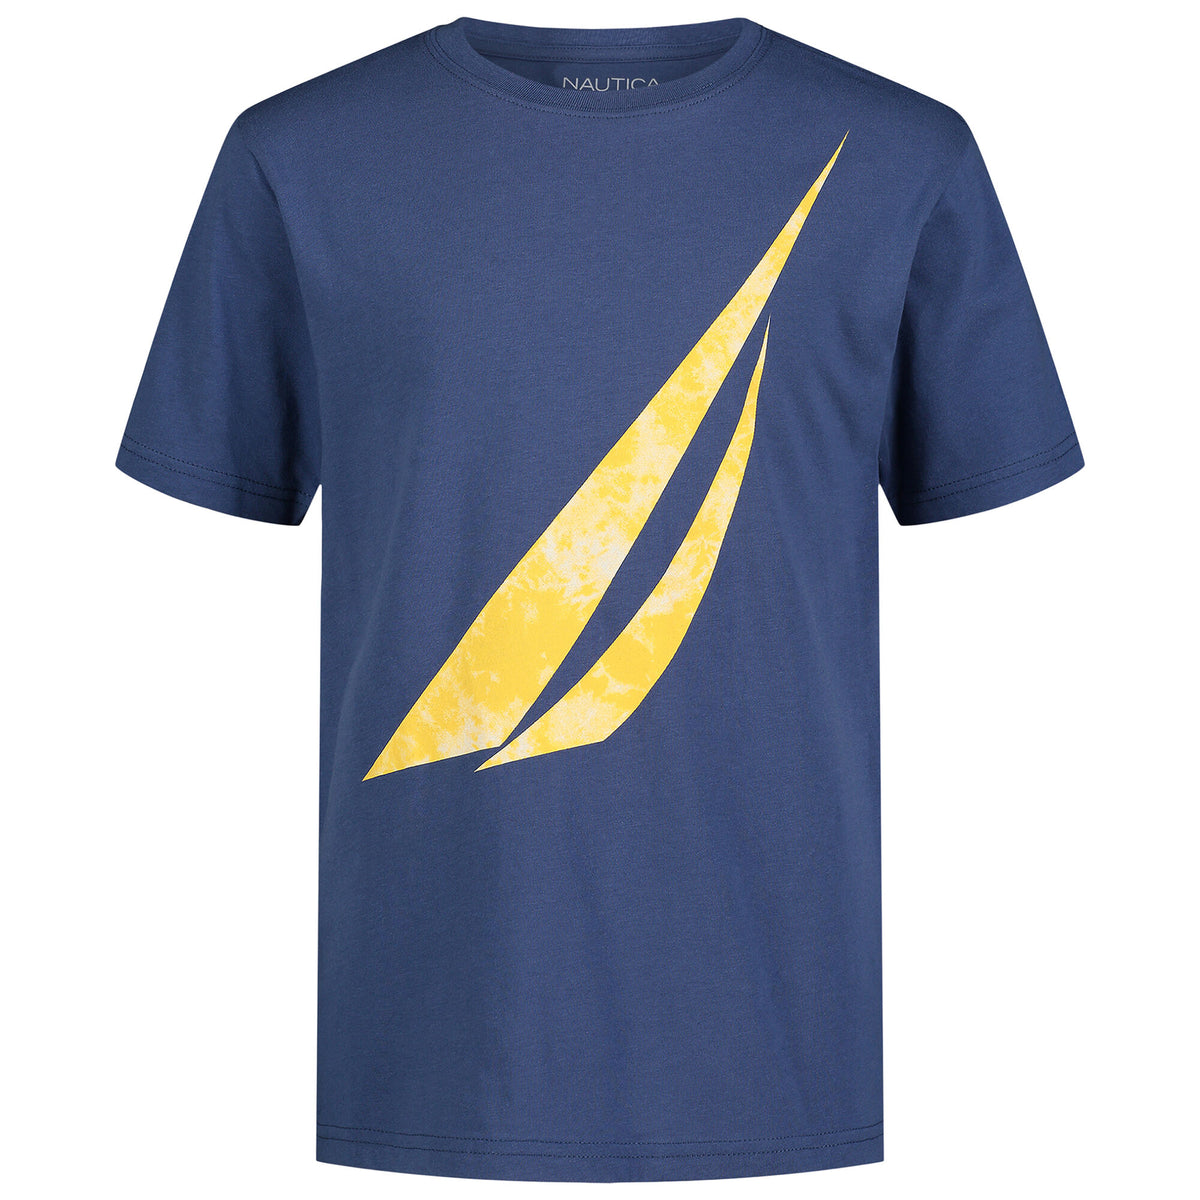 Nautica Toddler Boys' Tie Dye J-Class Logo Graphic T-Shirt (2T-4T) Blue Mirage